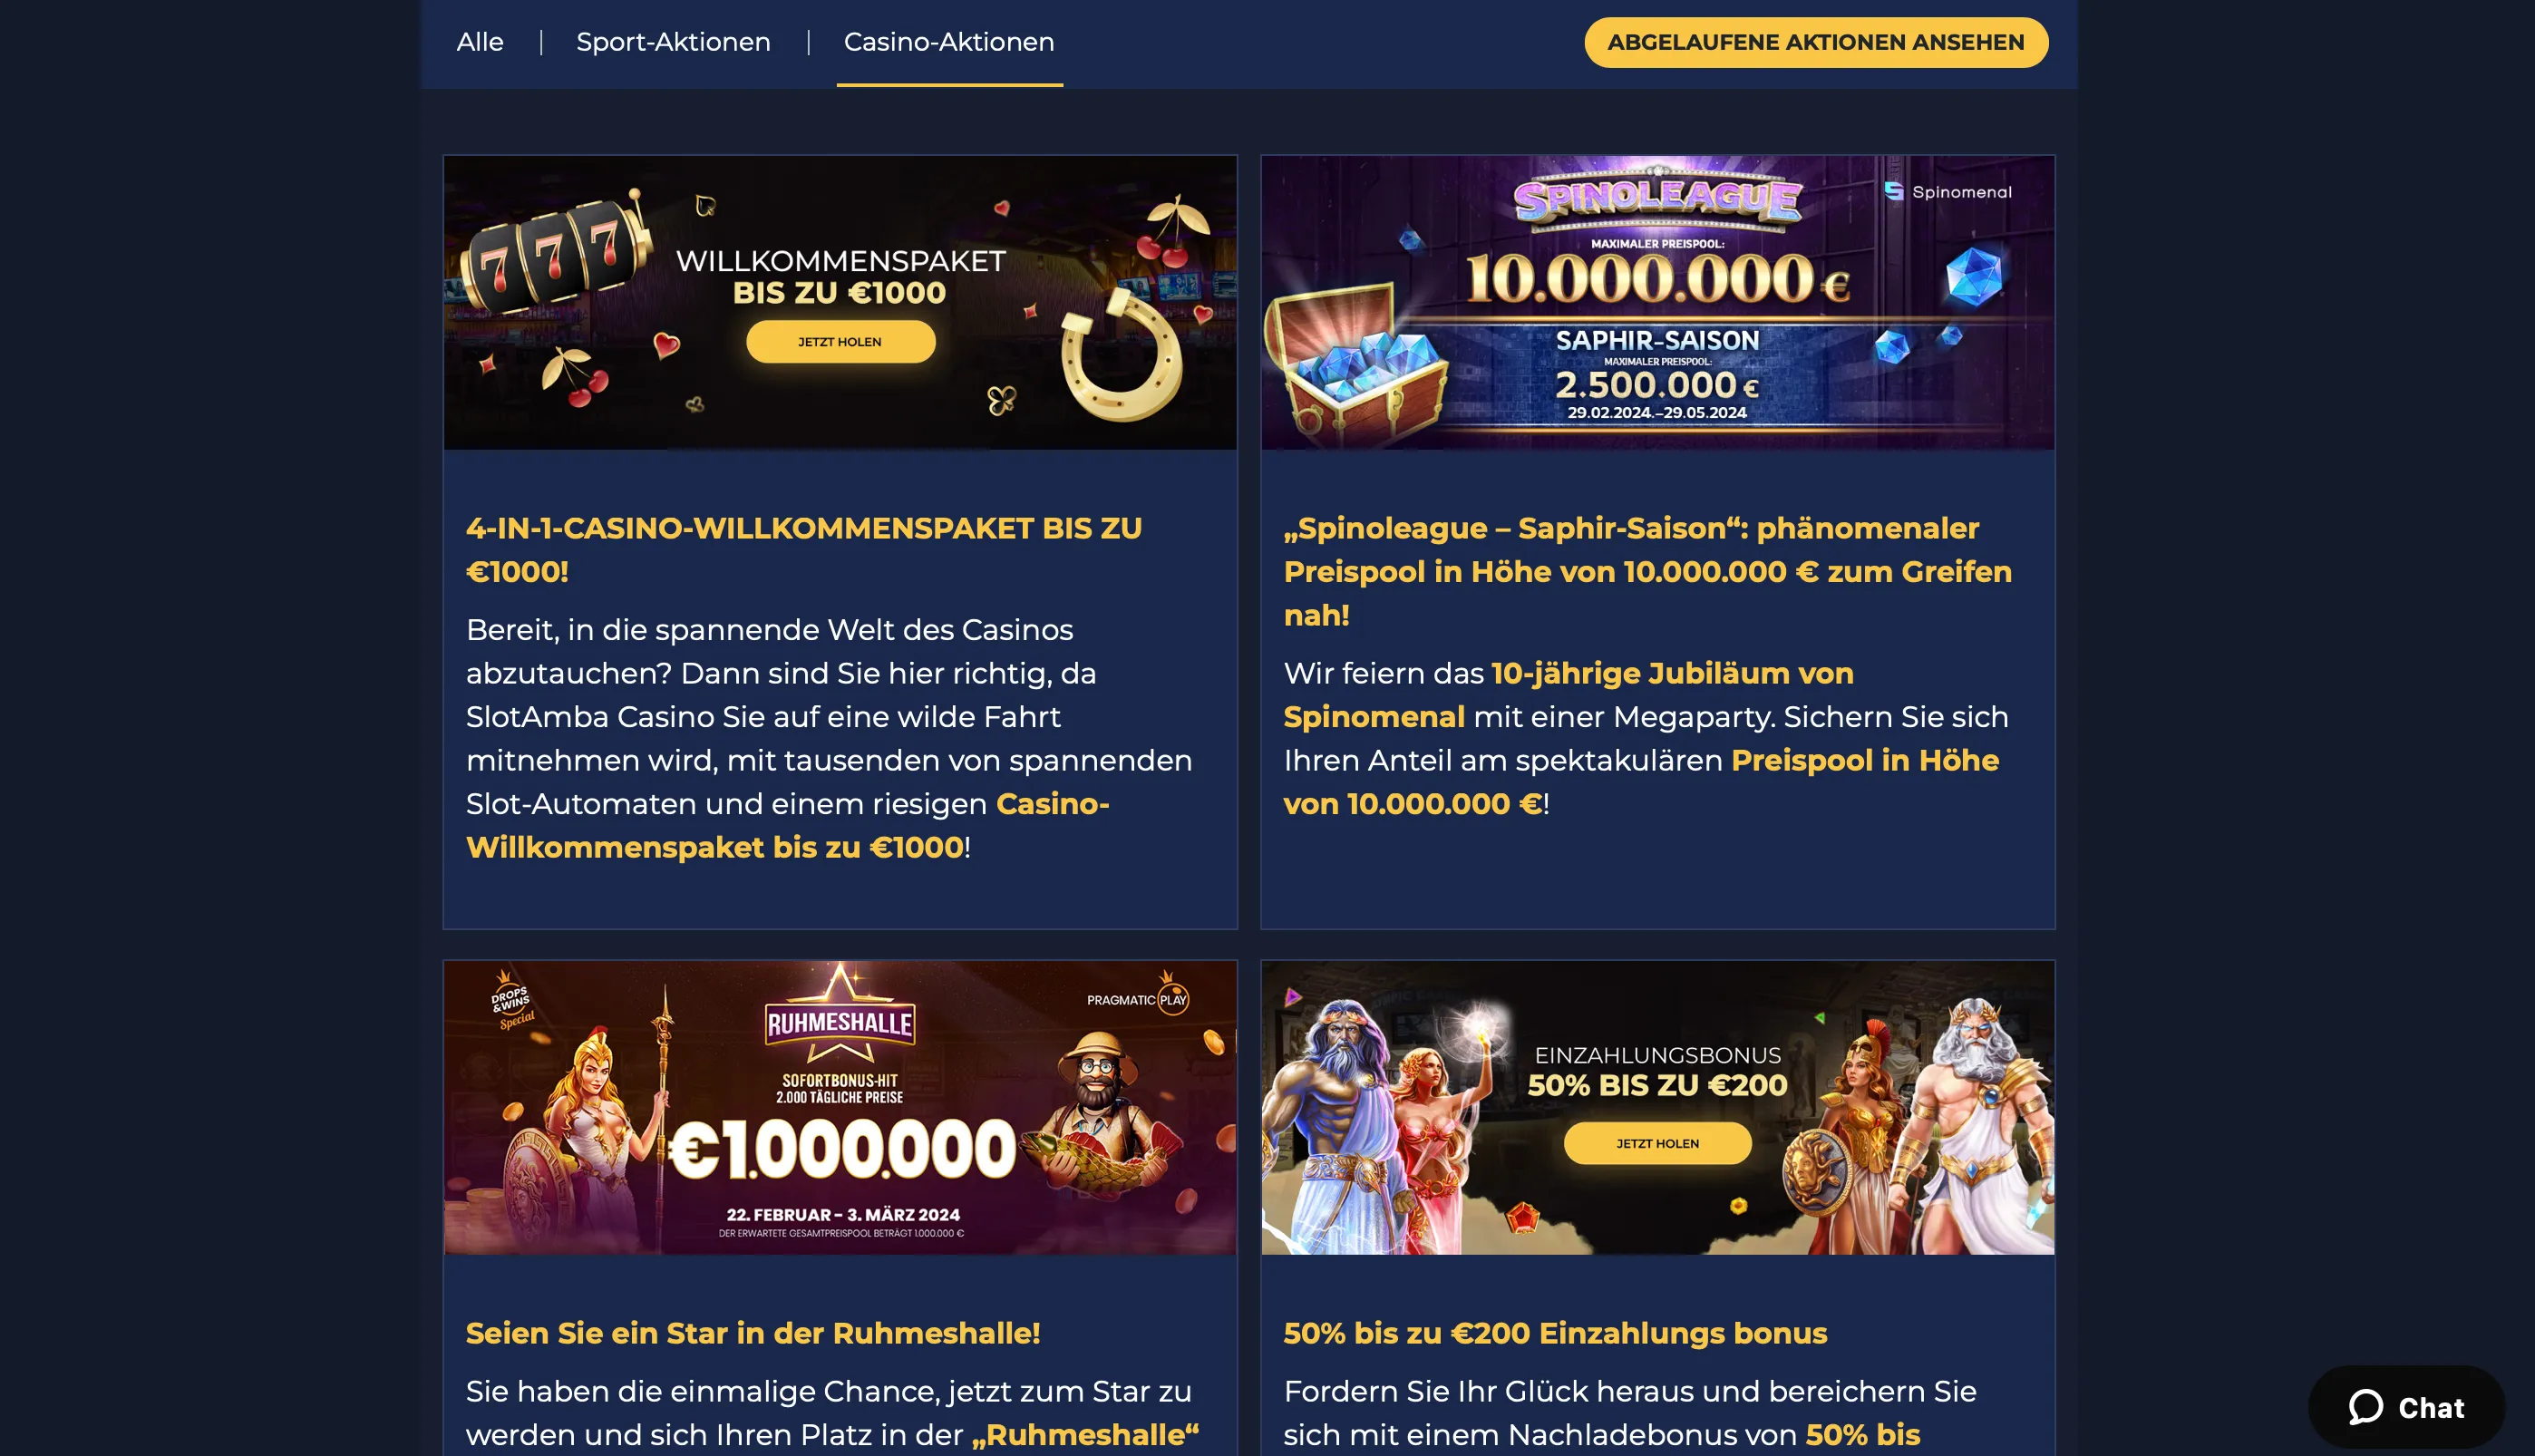 Slotamba Casino Bonusprogramm